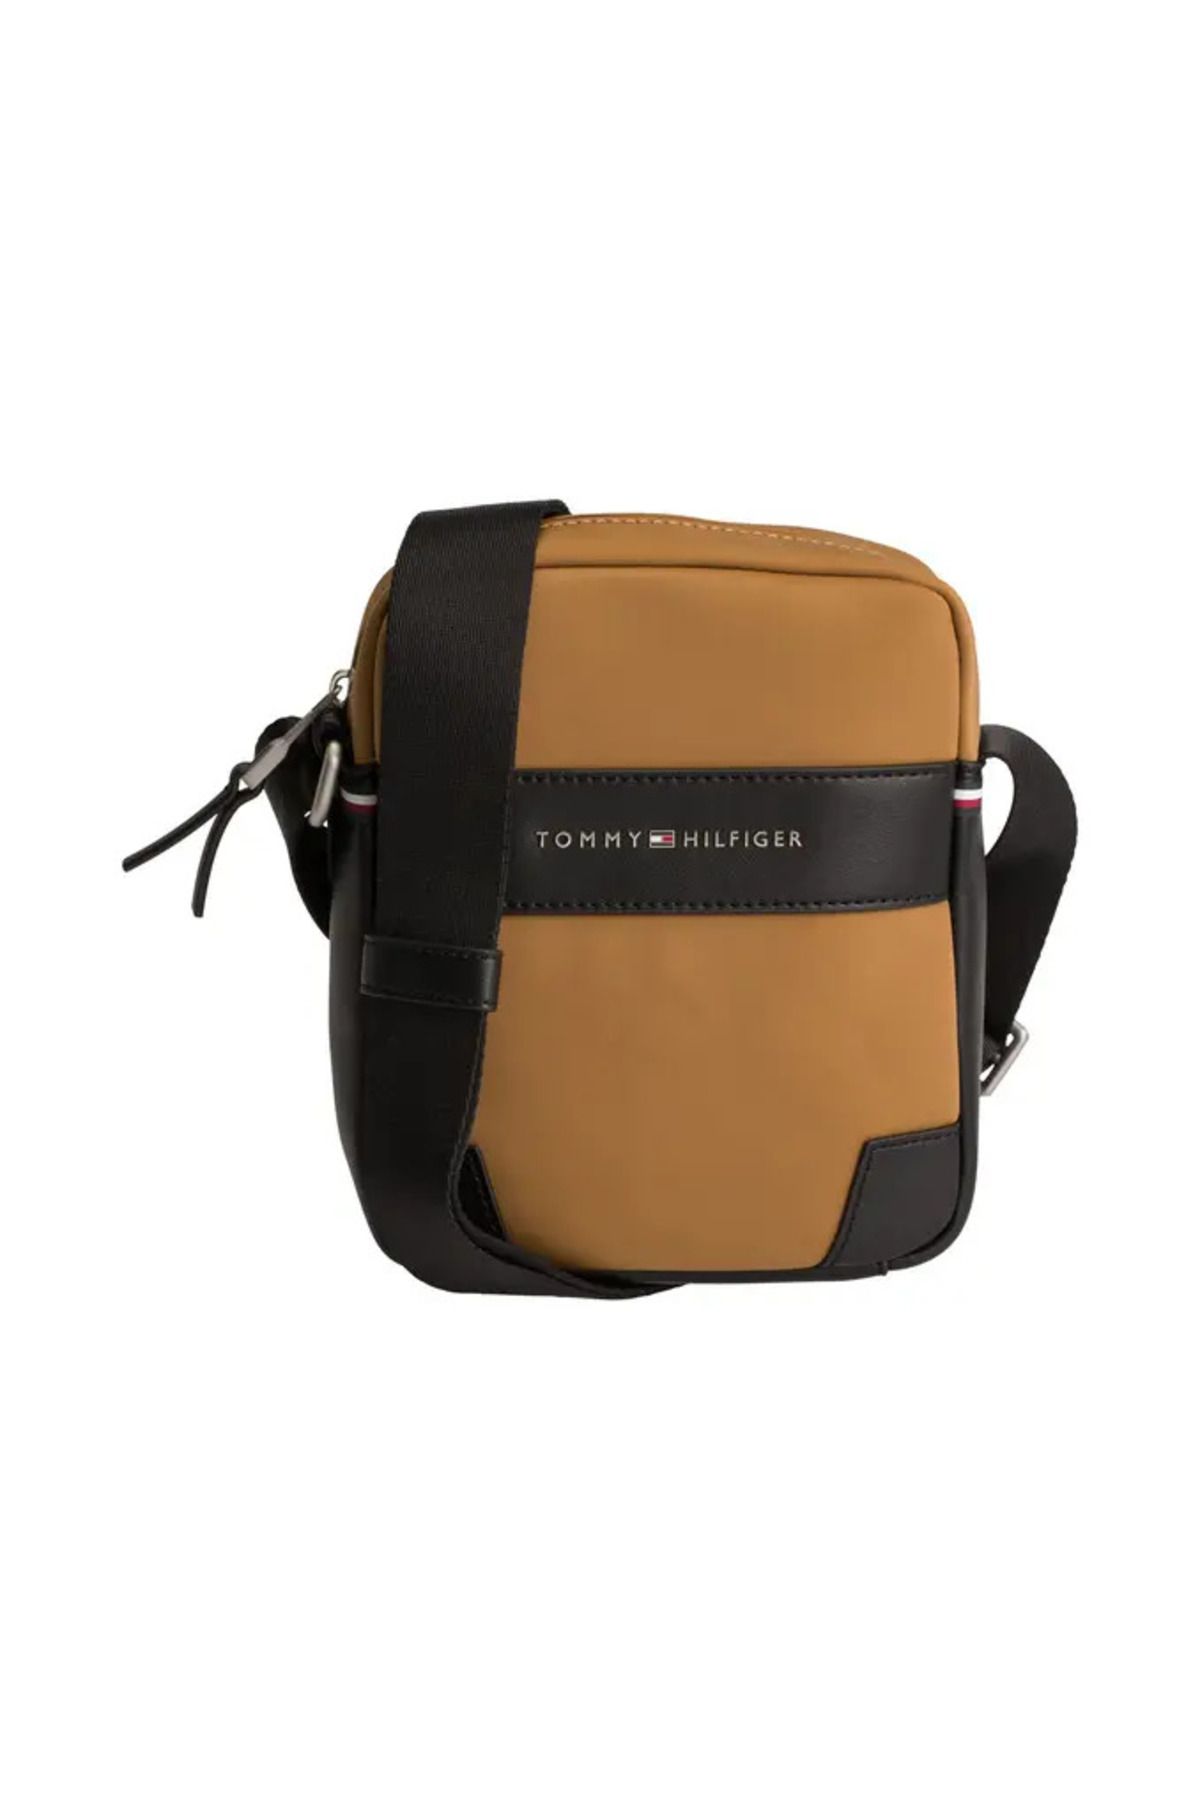 Tommy Hilfiger siyah-kahverengi erkek omuz çantası XM0XM02673GWJ